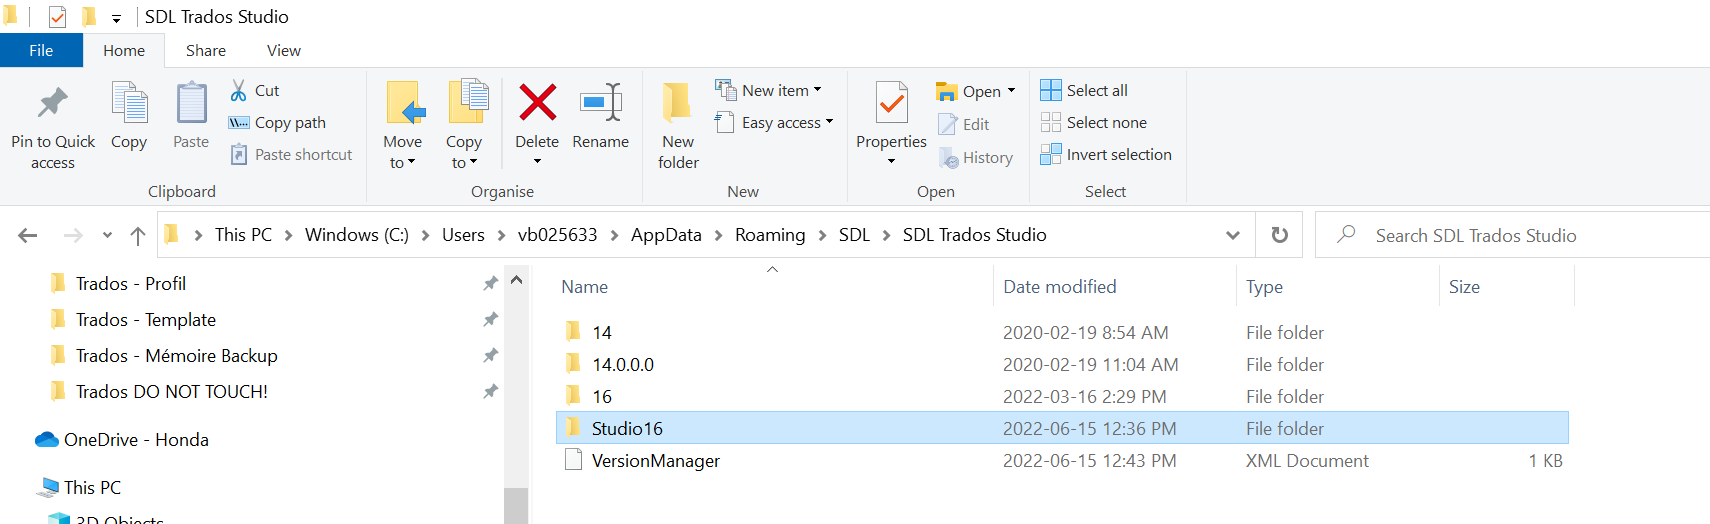 File Explorer window showing folders inside SDL Trados Studio directory. Visible folders include '14', '14.0.0.0', '16', and 'Studio16'. No 'Studio17' folder is present.